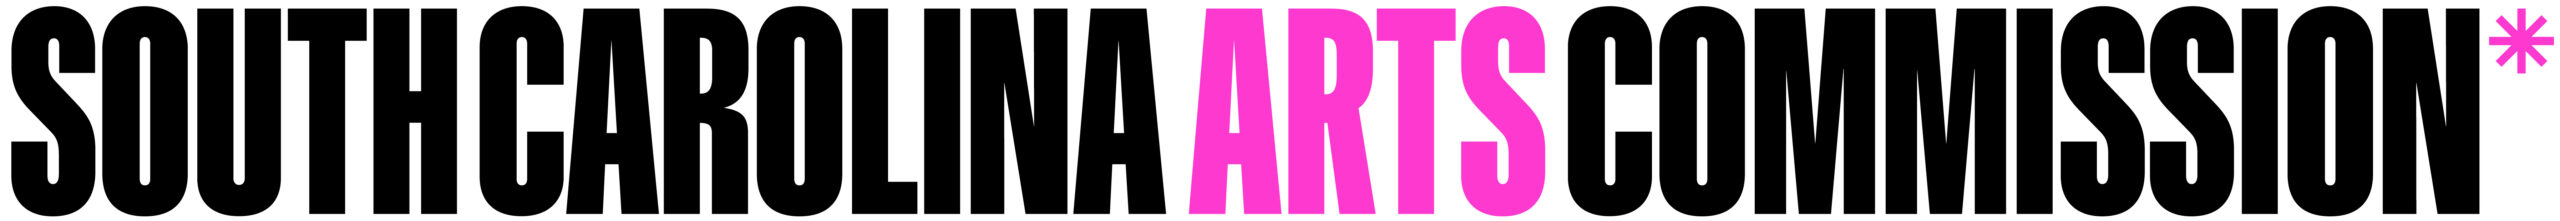 South Carolina Arts Commission logo